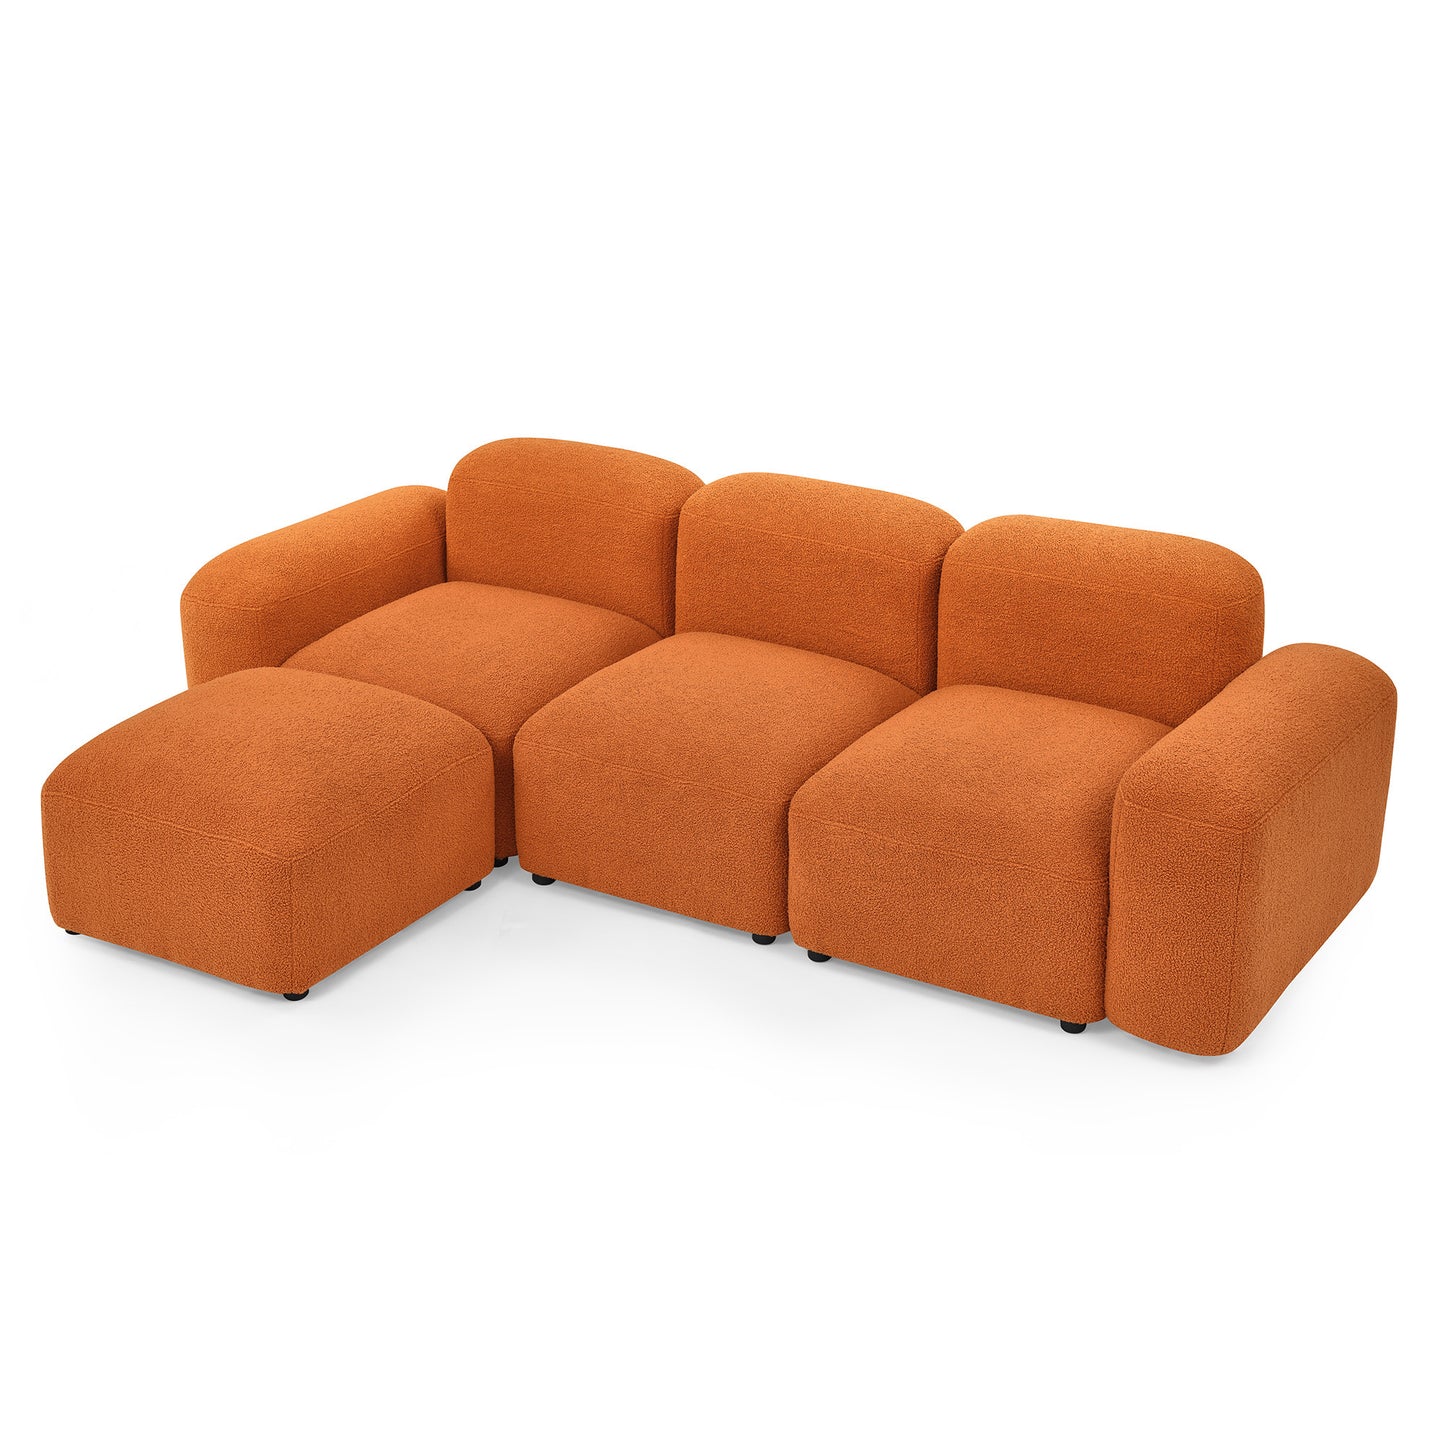 L-Shape Modular Sectional Sofa,DIY Combination,Teddy Fabric,Orange.